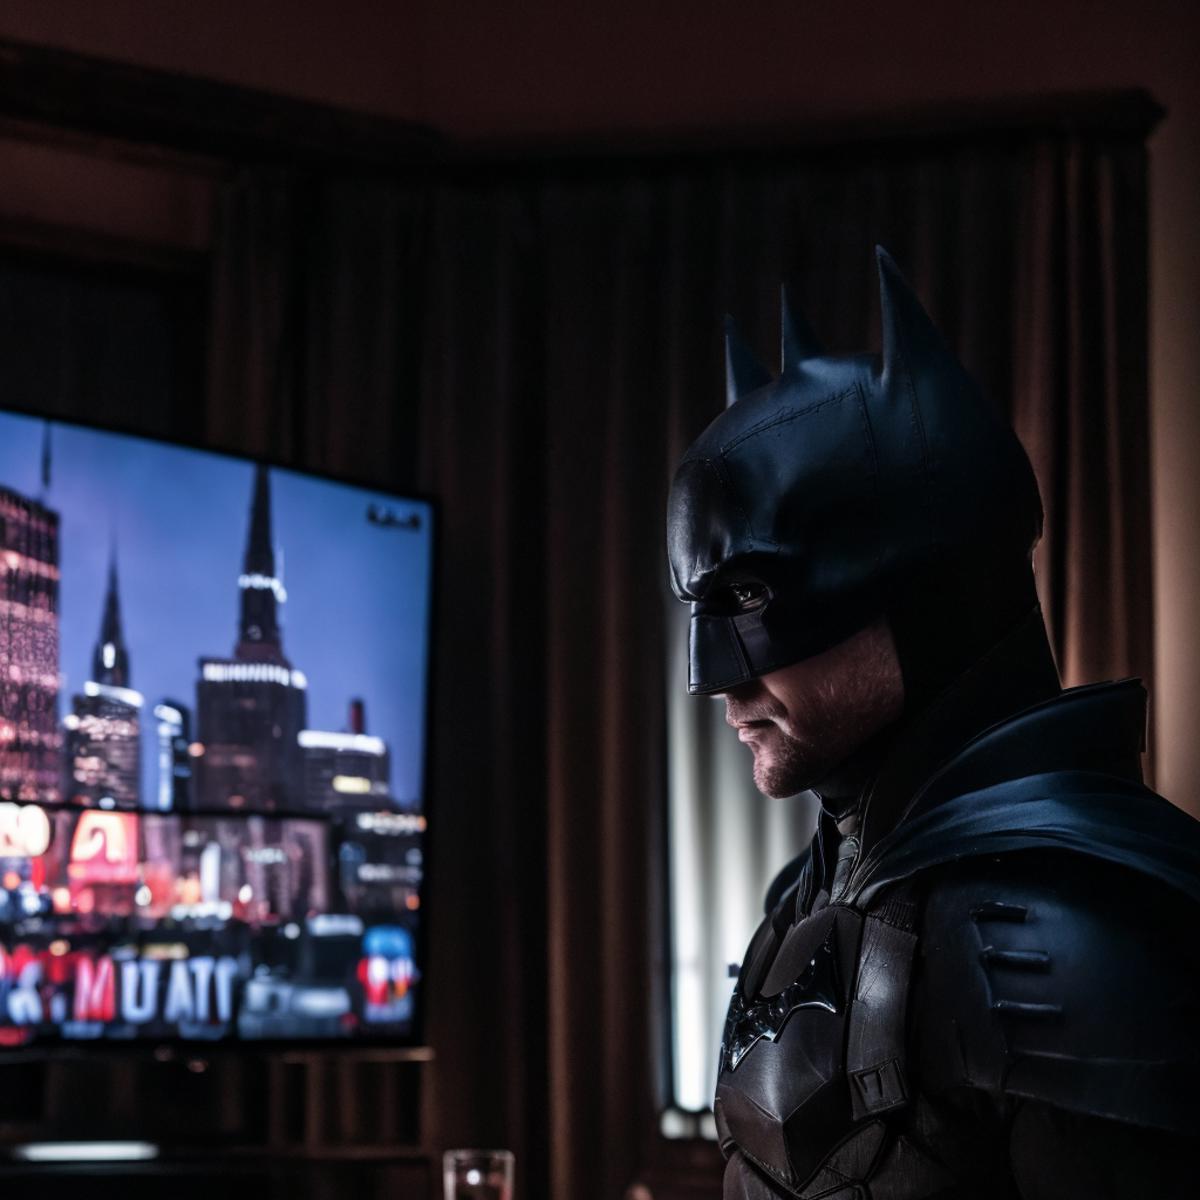 The Batman (Robert Pattinson) image by Bloodysunkist